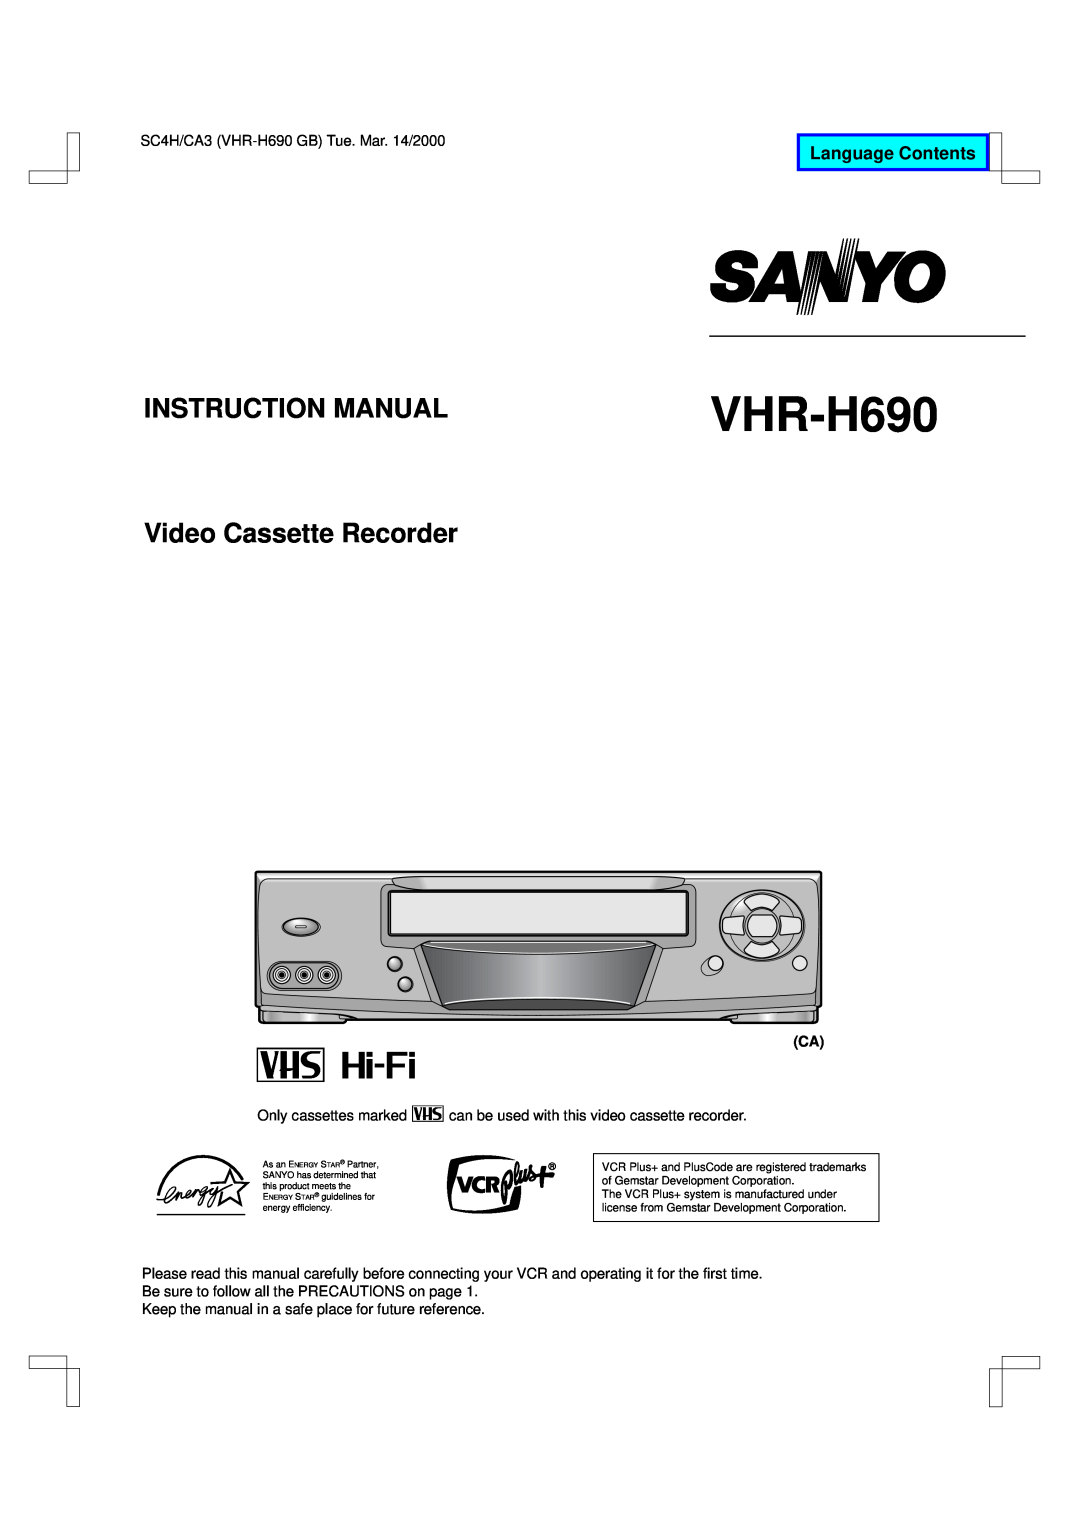 Sanyo VHR-H690 instruction manual Language Contents, Instruction Manual, Video Cassette Recorder 